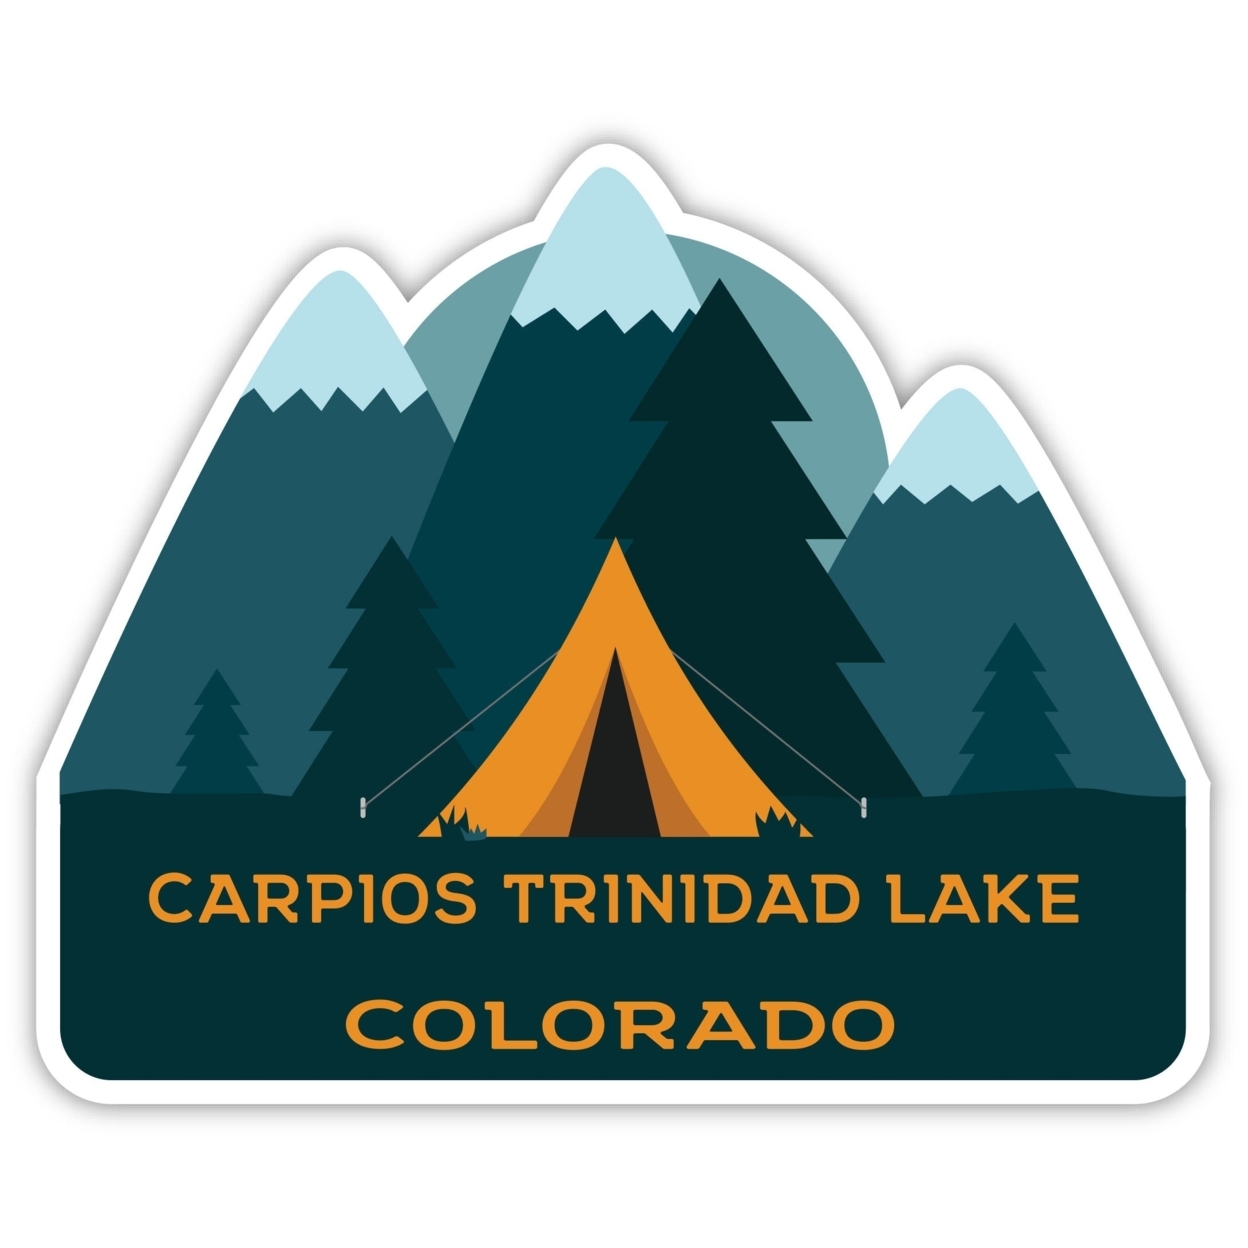 Carpios Trinidad Lake Colorado Souvenir Decorative Stickers (Choose Theme And Size) - 4-Pack, 8-Inch, Tent